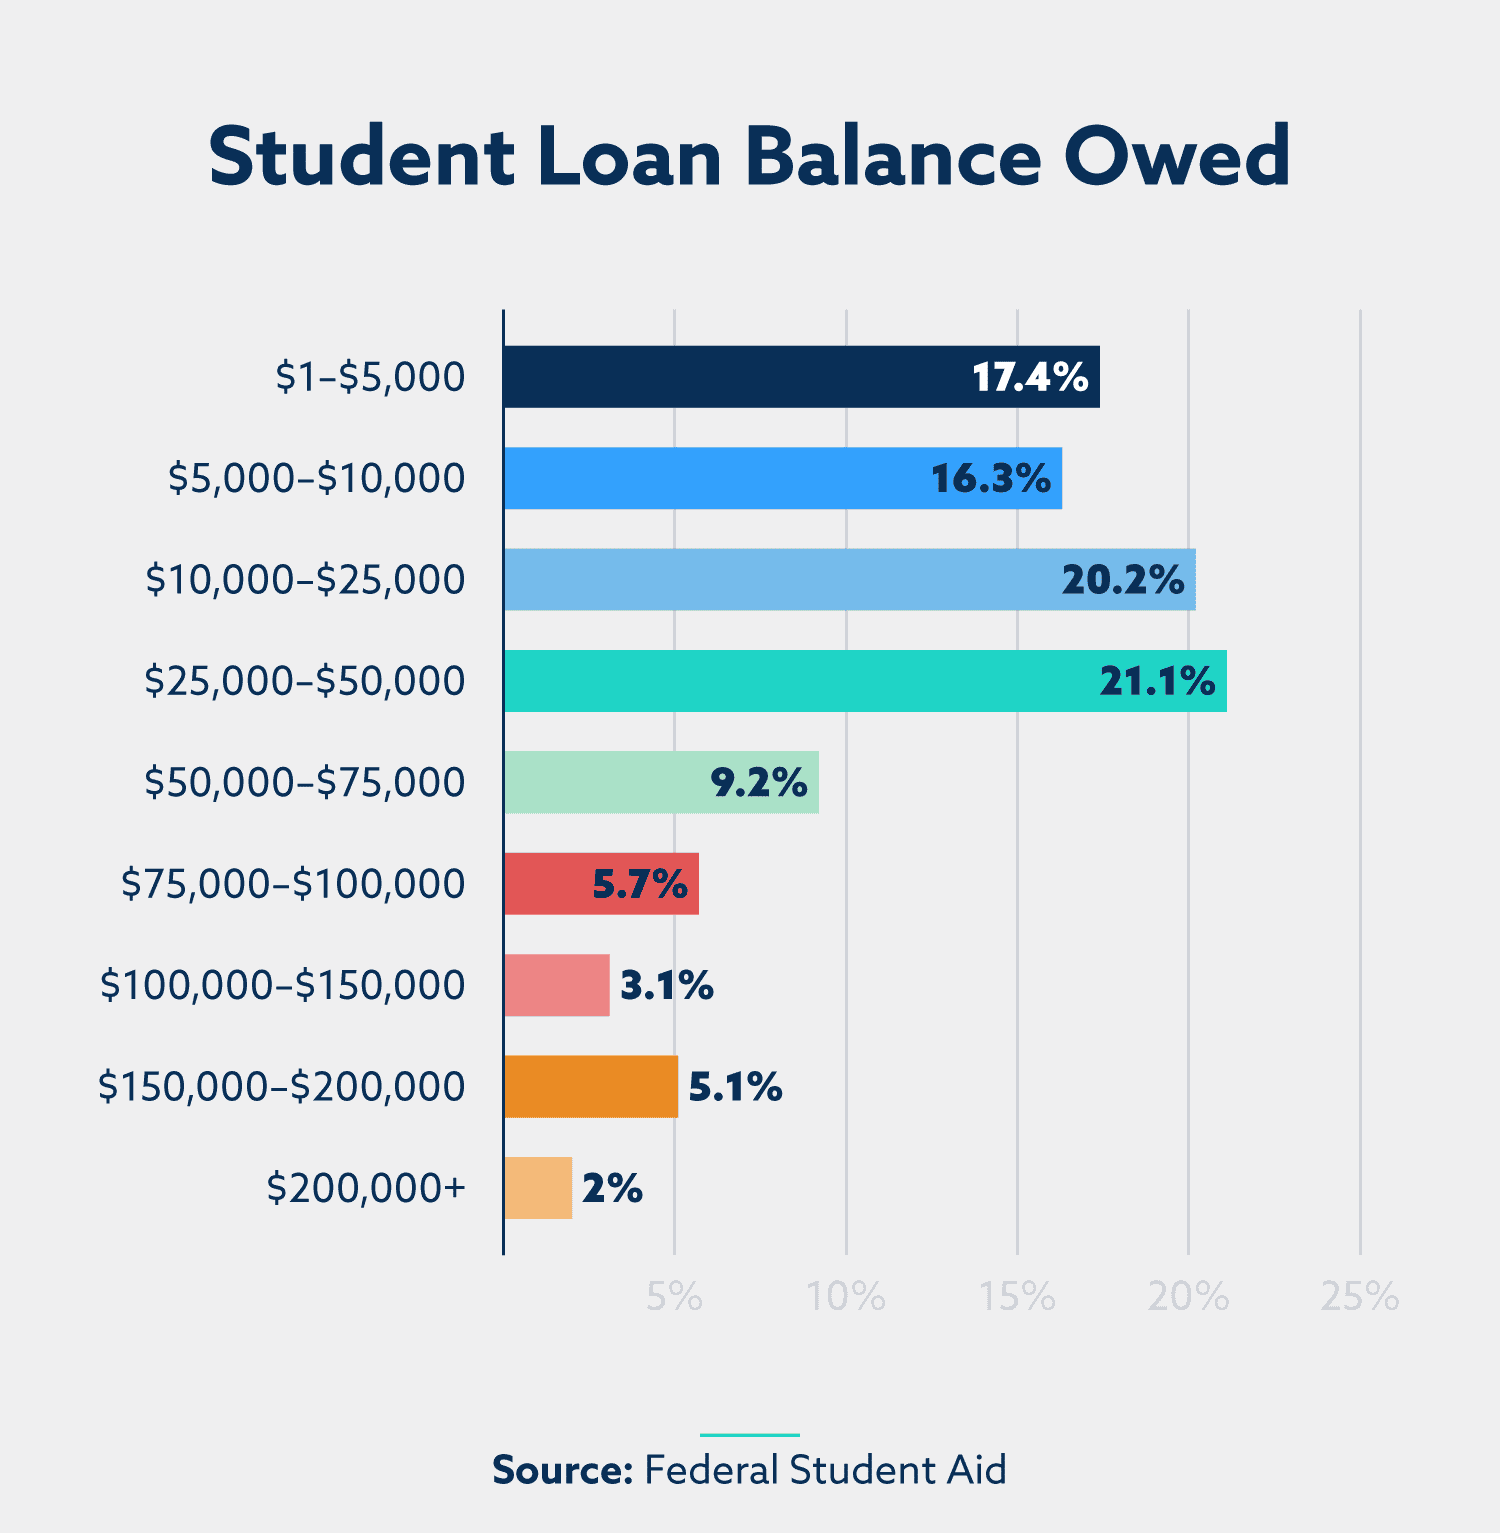 Student loan debt statistics for 2021